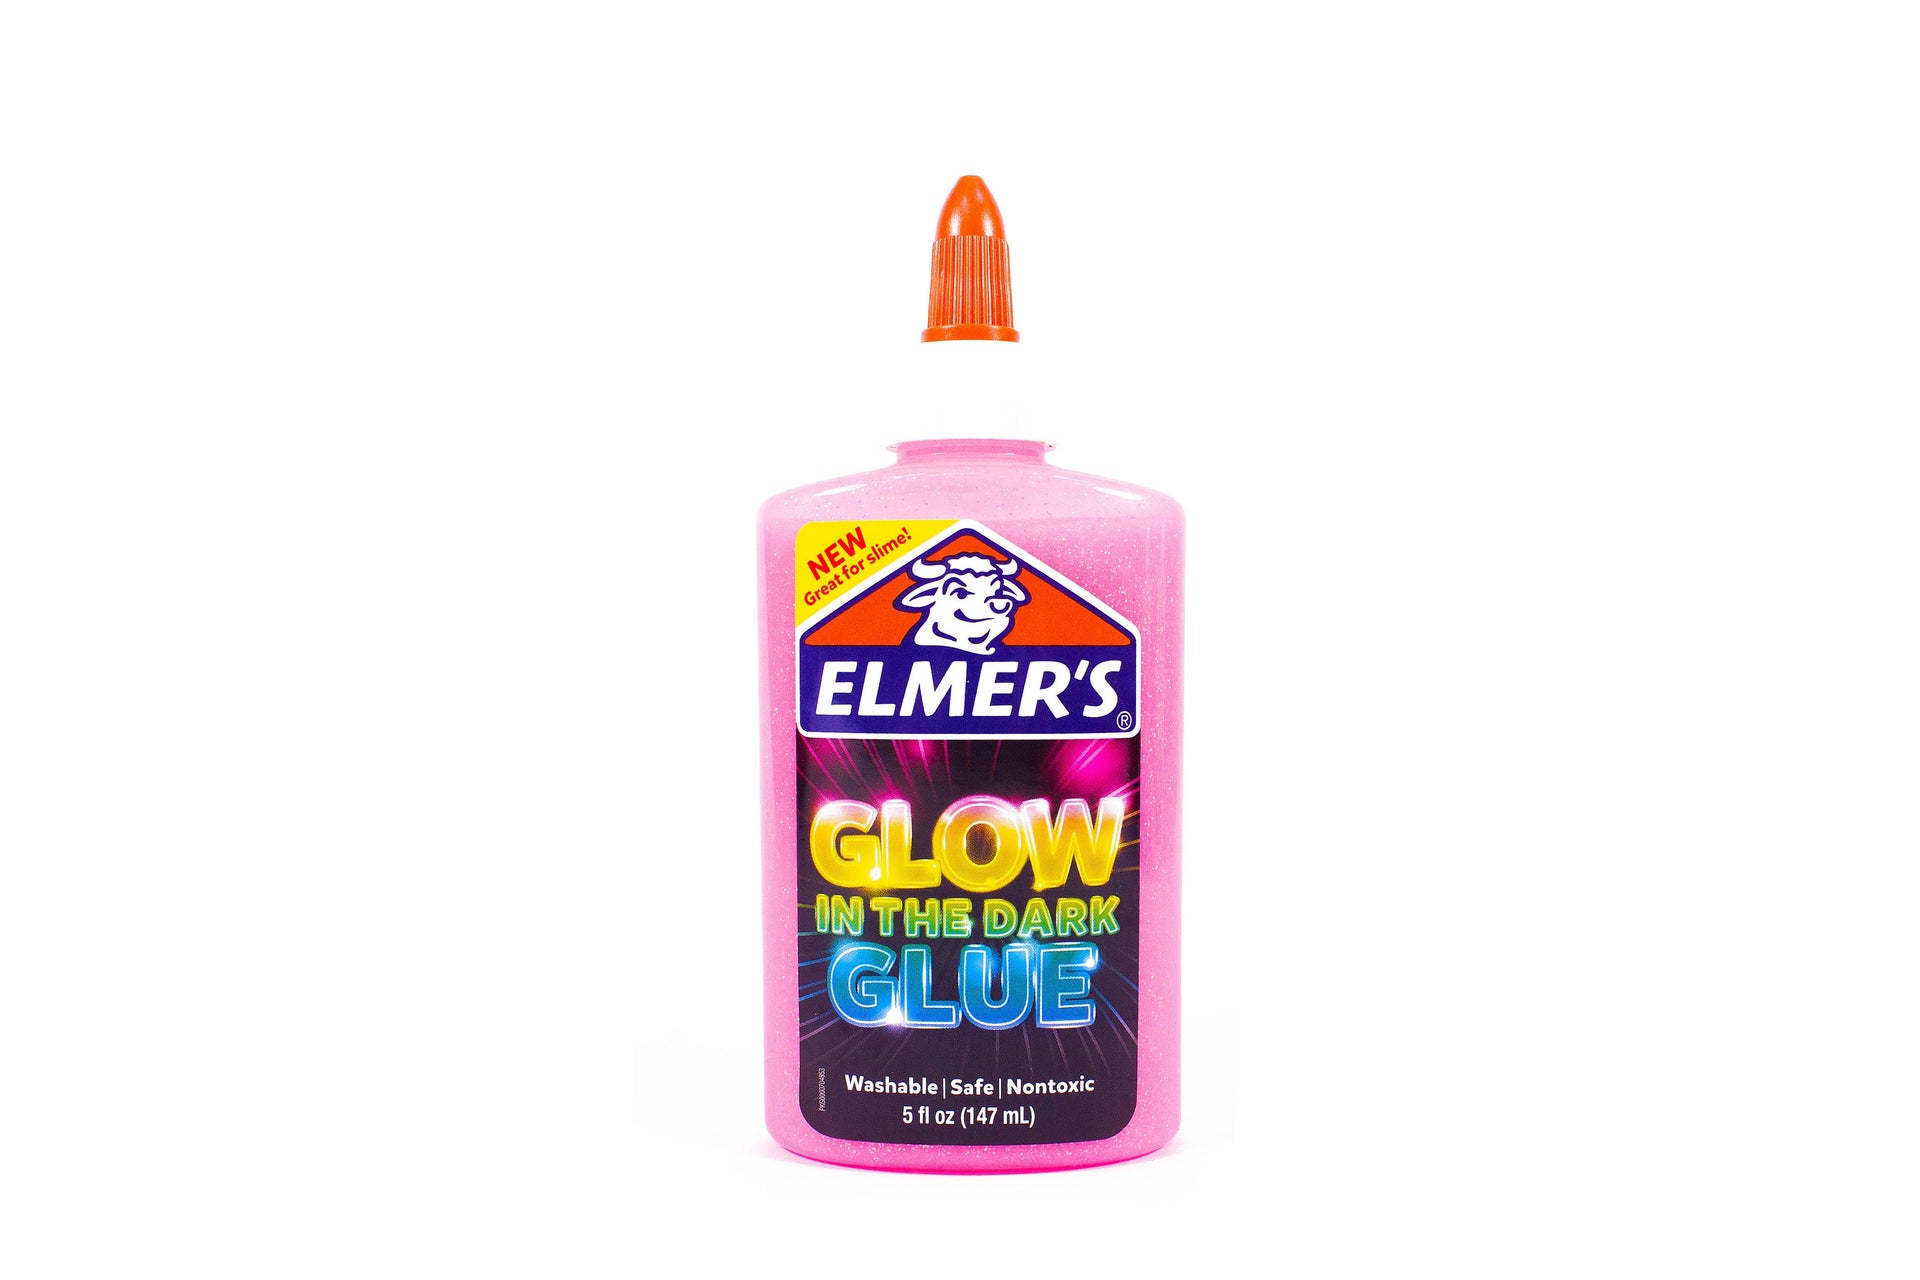 Elmer's Glow in the Dark Glue is Newell Brands' Latest Bright